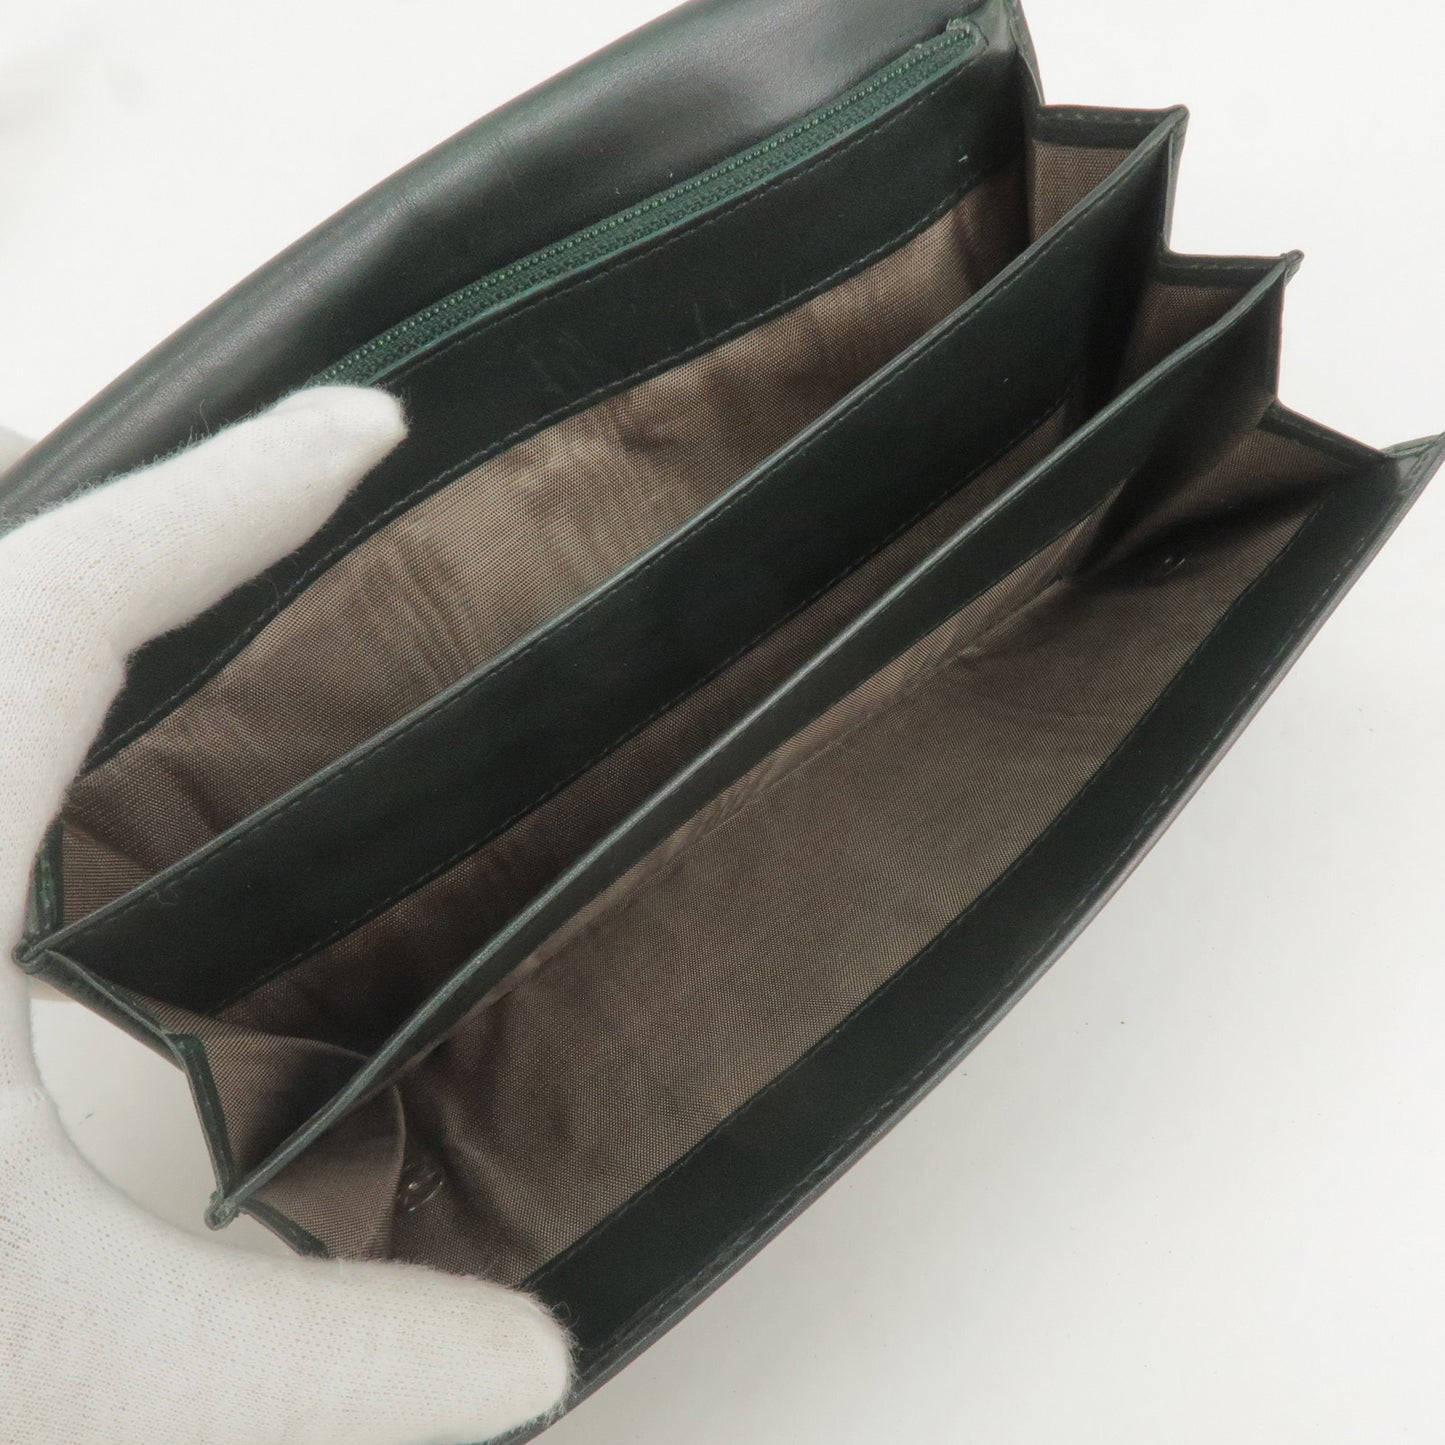 PRADA Logo Leather Bi Fold Long Wallet With Flap Dark Green